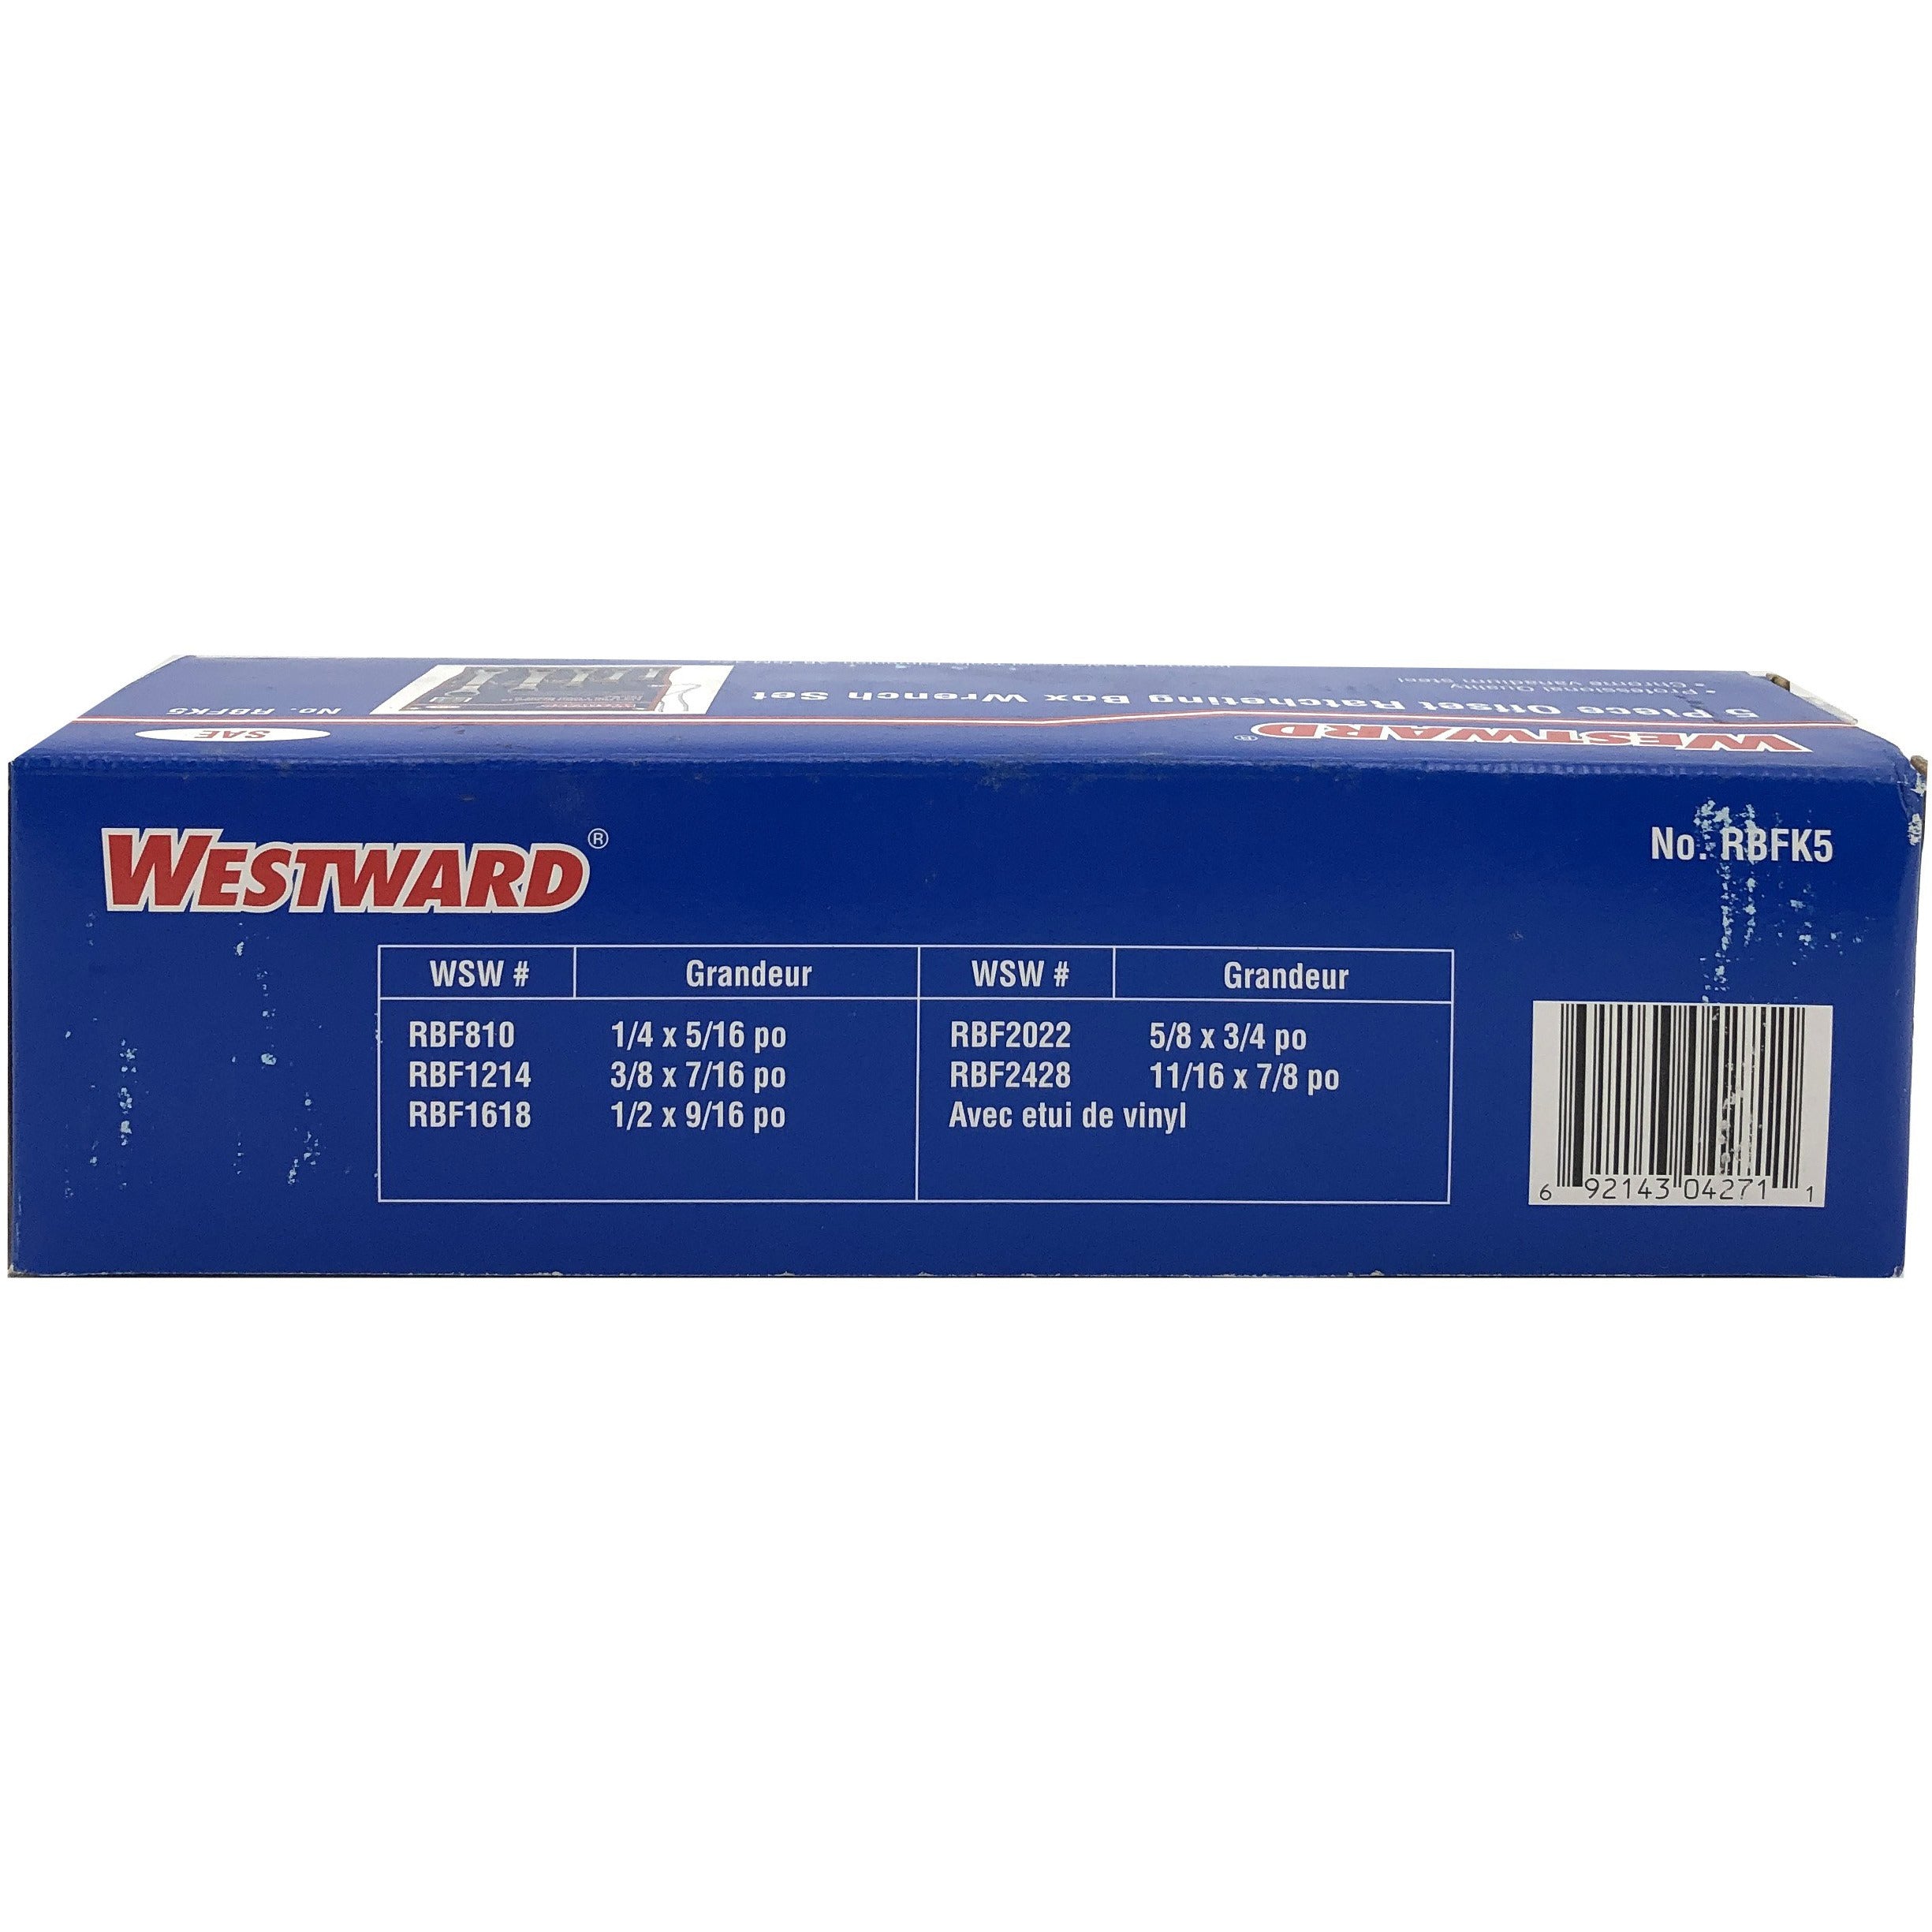 Westward 5 Piece Off Set Wrench Set / Ratcheting / Professional Tool / Chrome